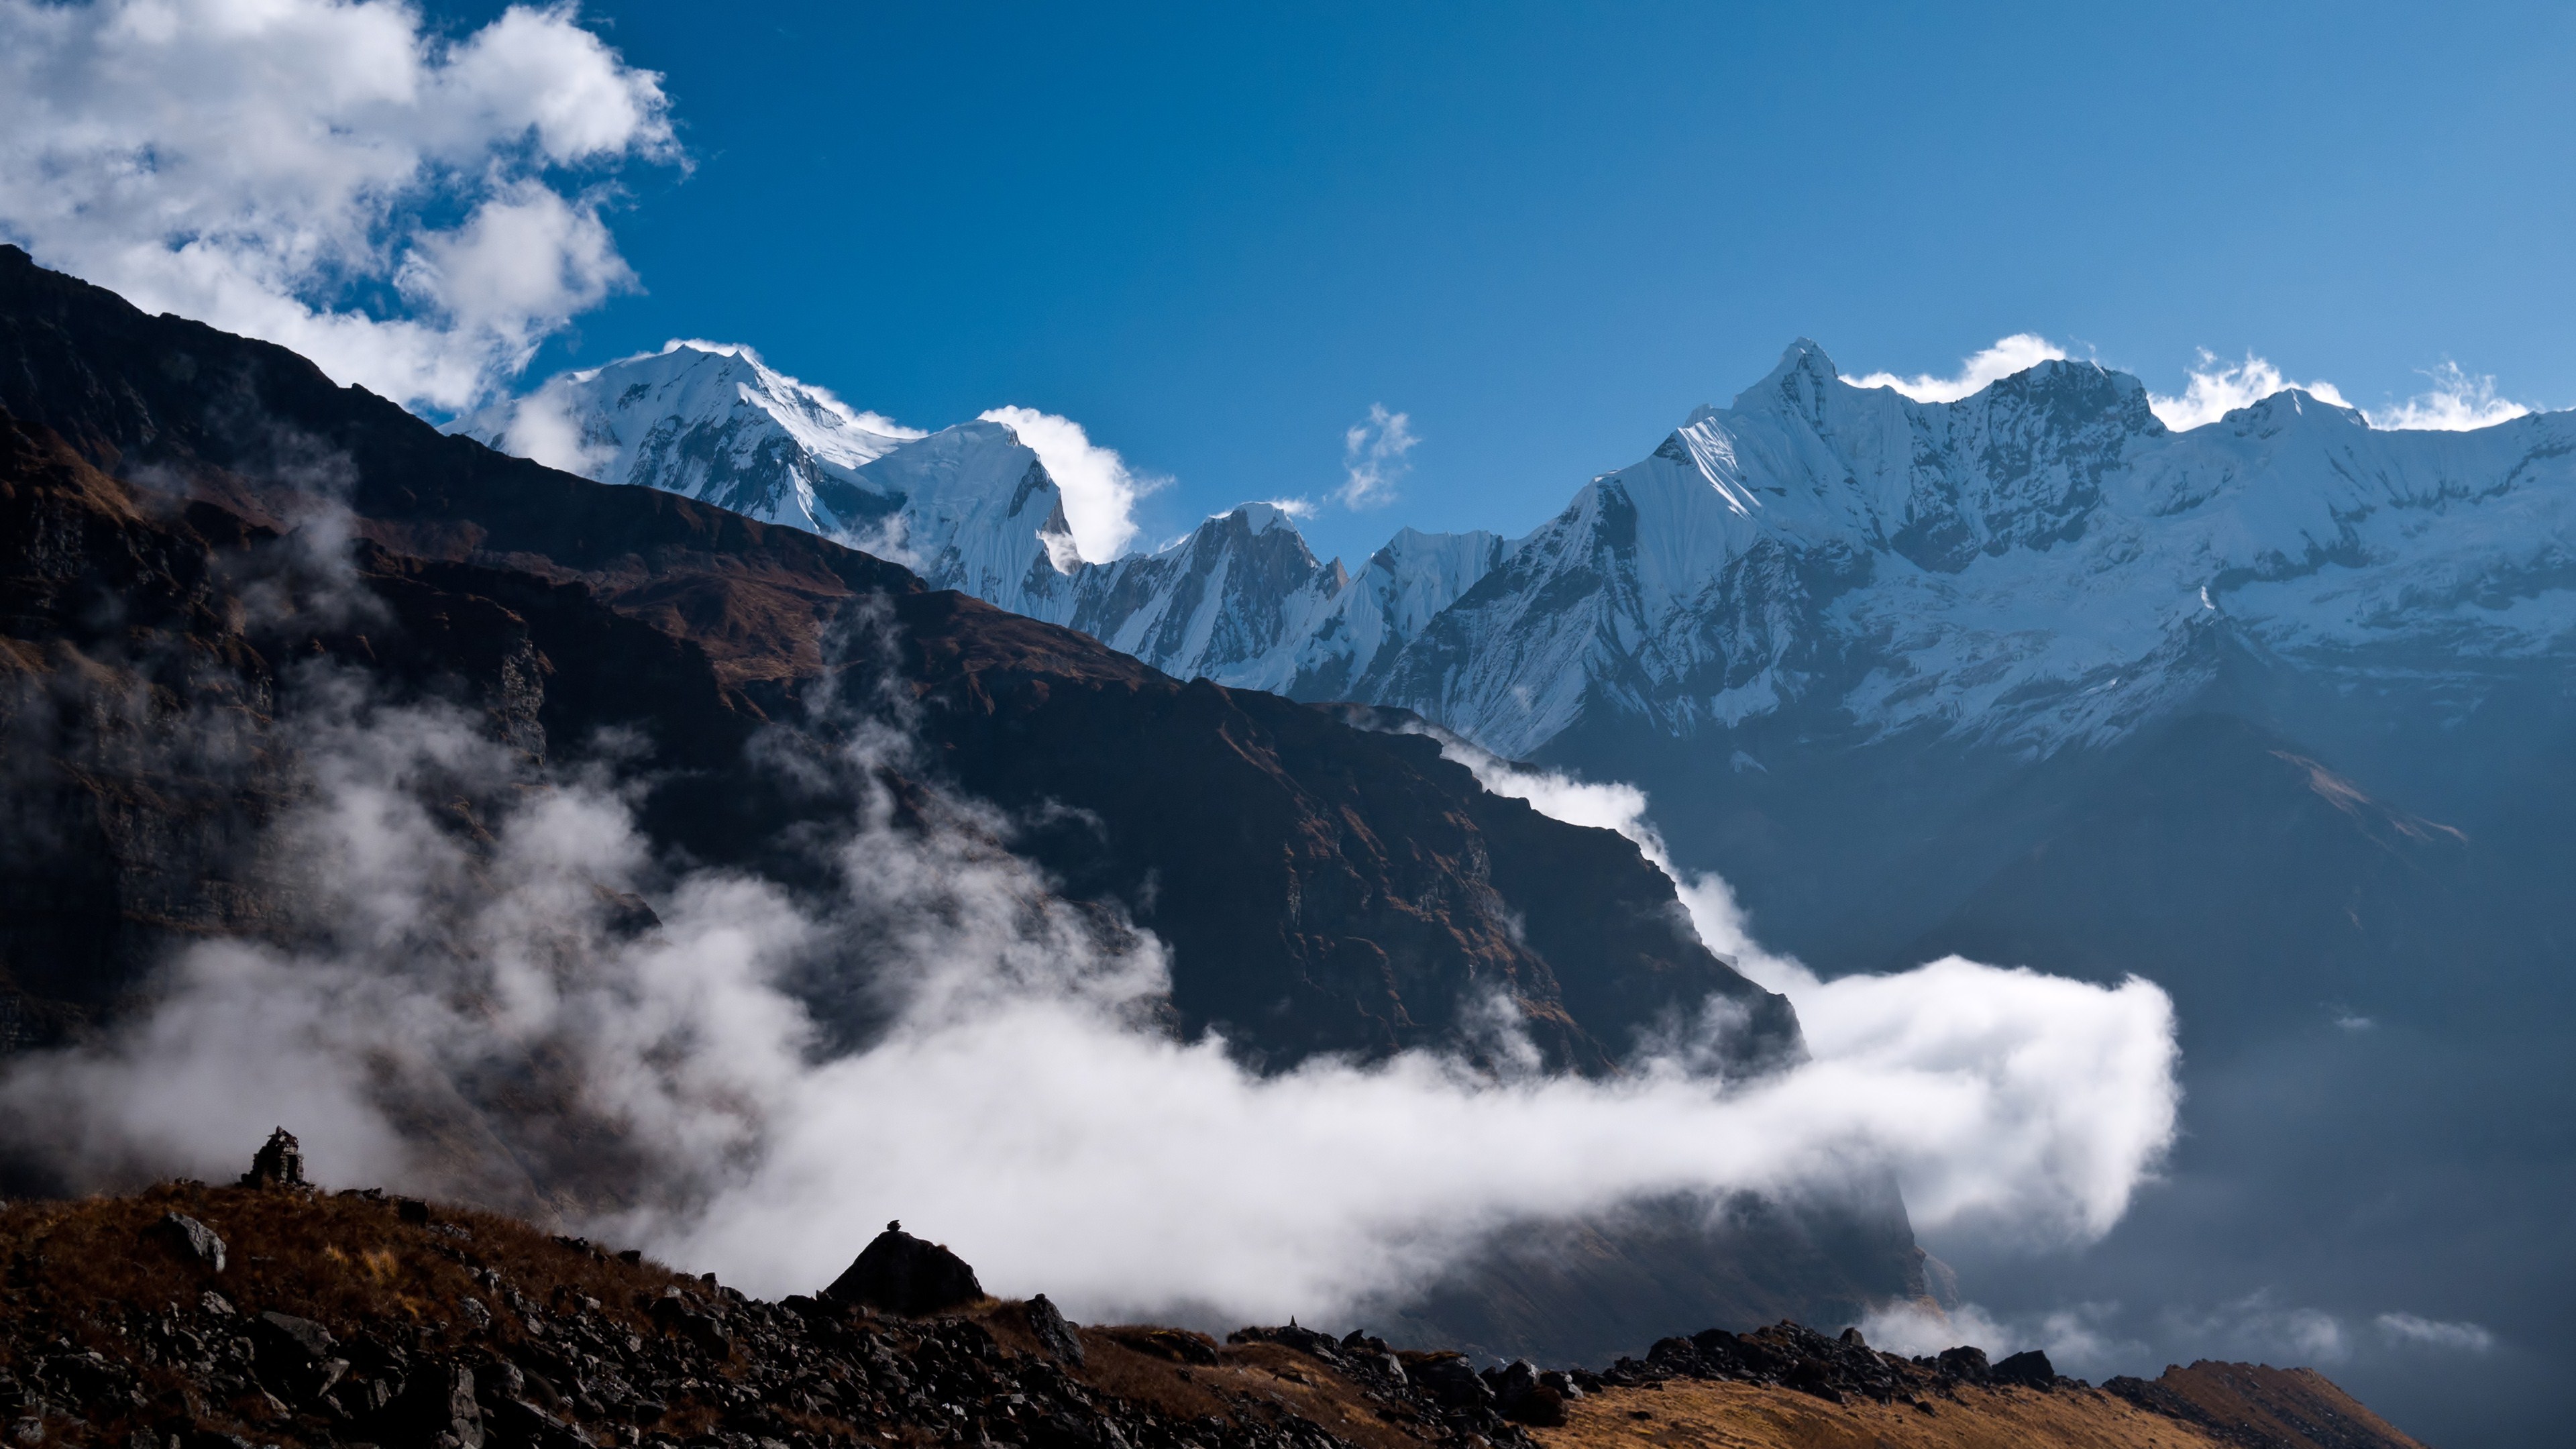 320717 descargar imagen tierra/naturaleza, montaña, himalaya, montañas: fondos de pantalla y protectores de pantalla gratis